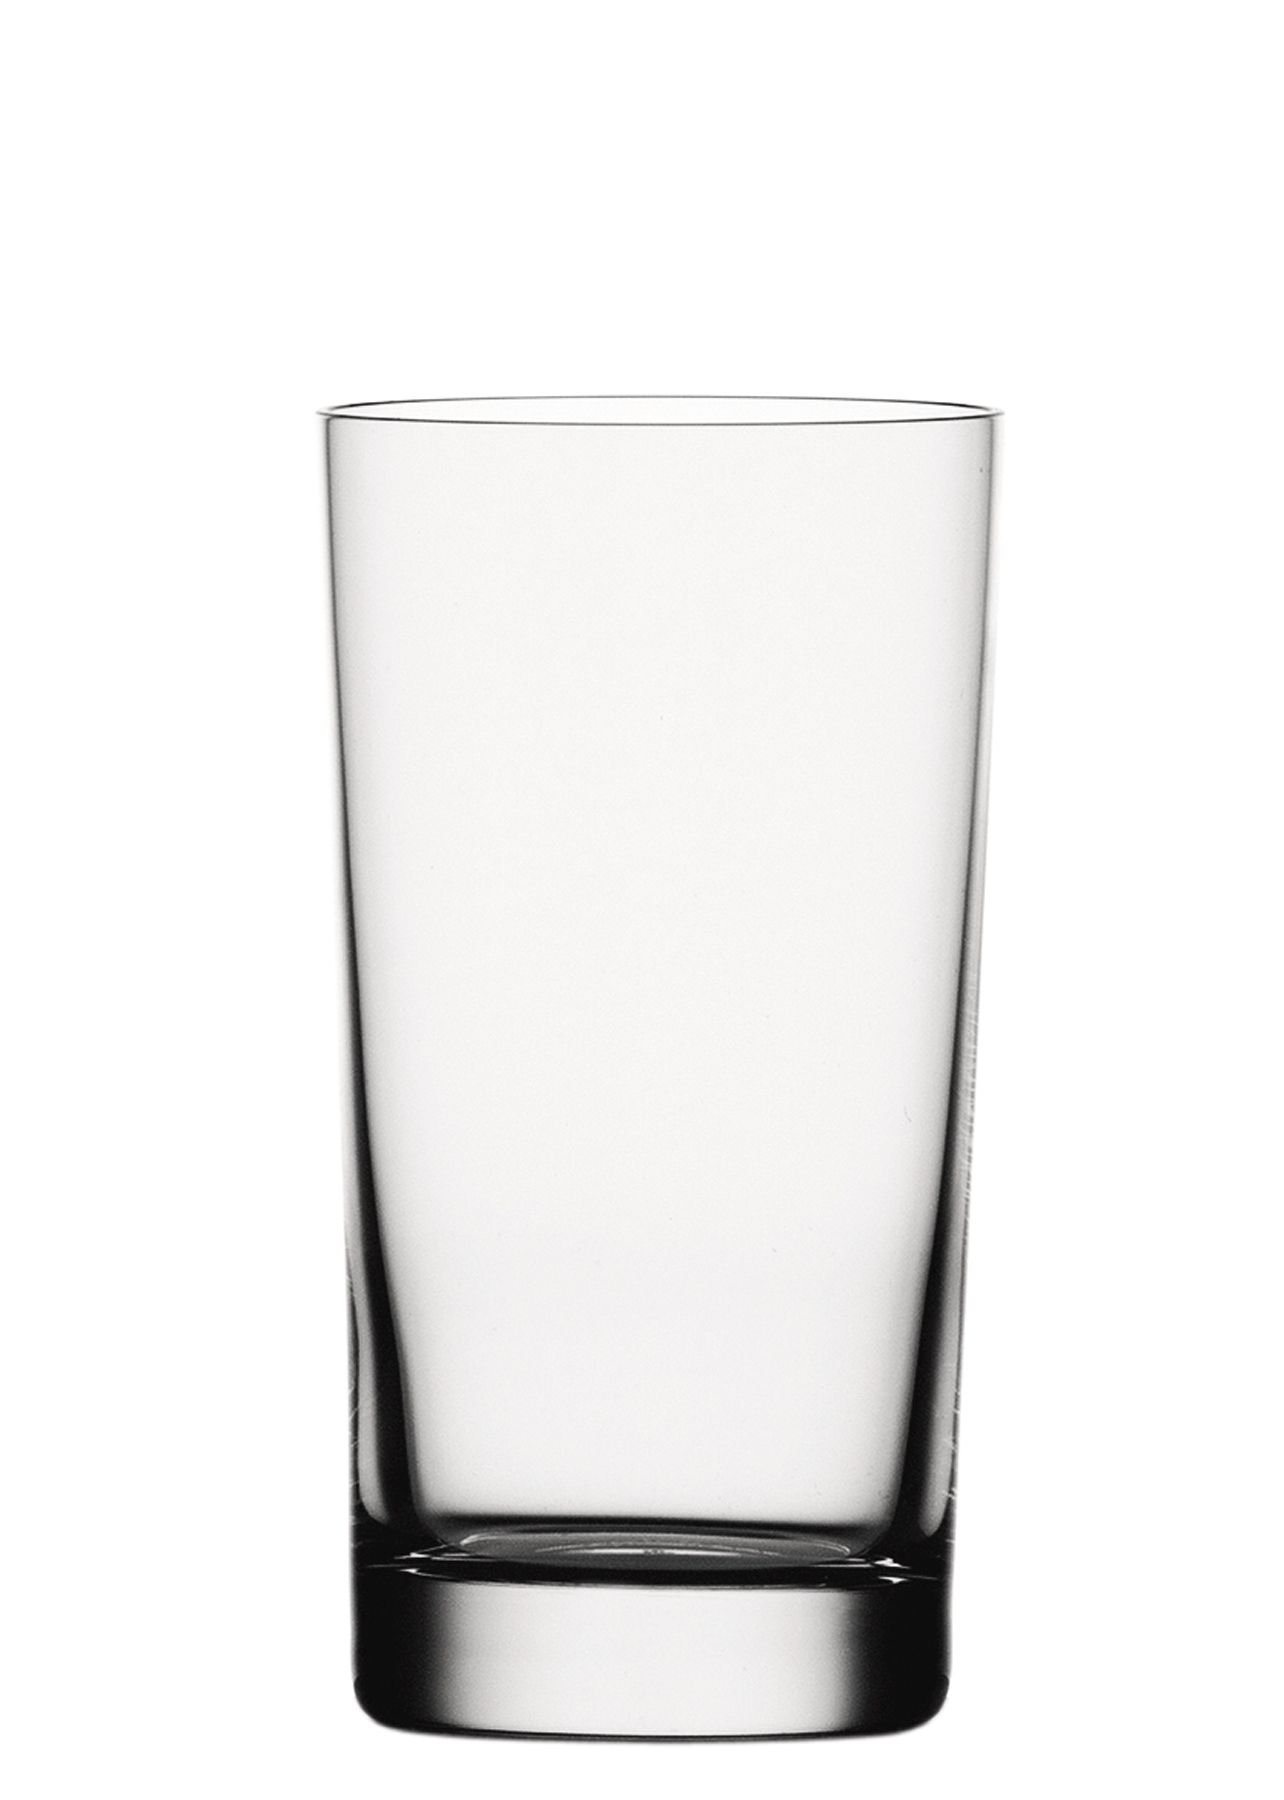 Mixdrink glass Classic Bar, Spiegelau - 345ml (1 pc.)